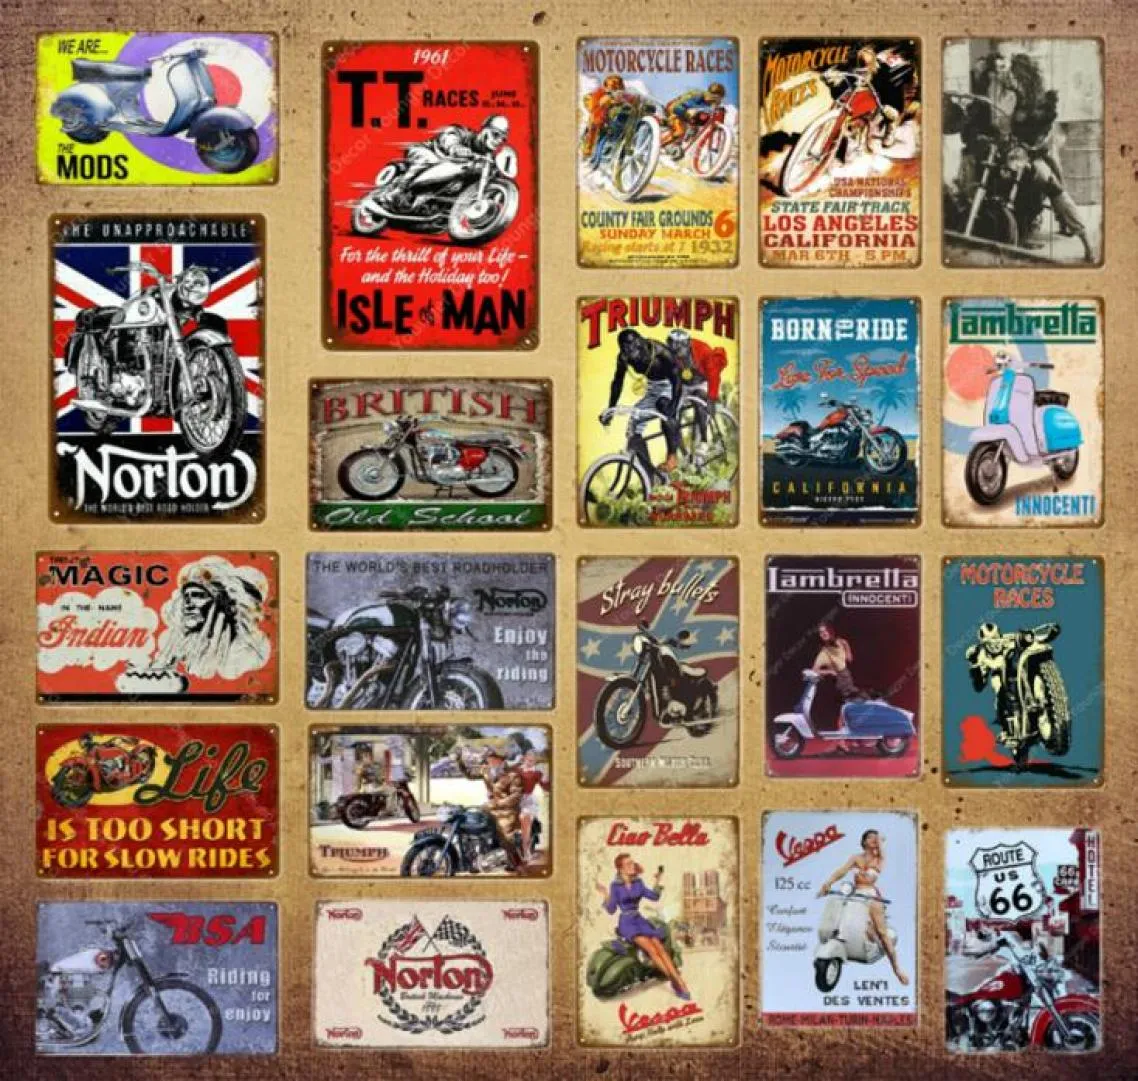 2021 American British Motorcycle Metall Painting Schilder Vintage Platte für Pub Bar Cafe Home Wall Decor Norton Poster Retro Plaque6341971